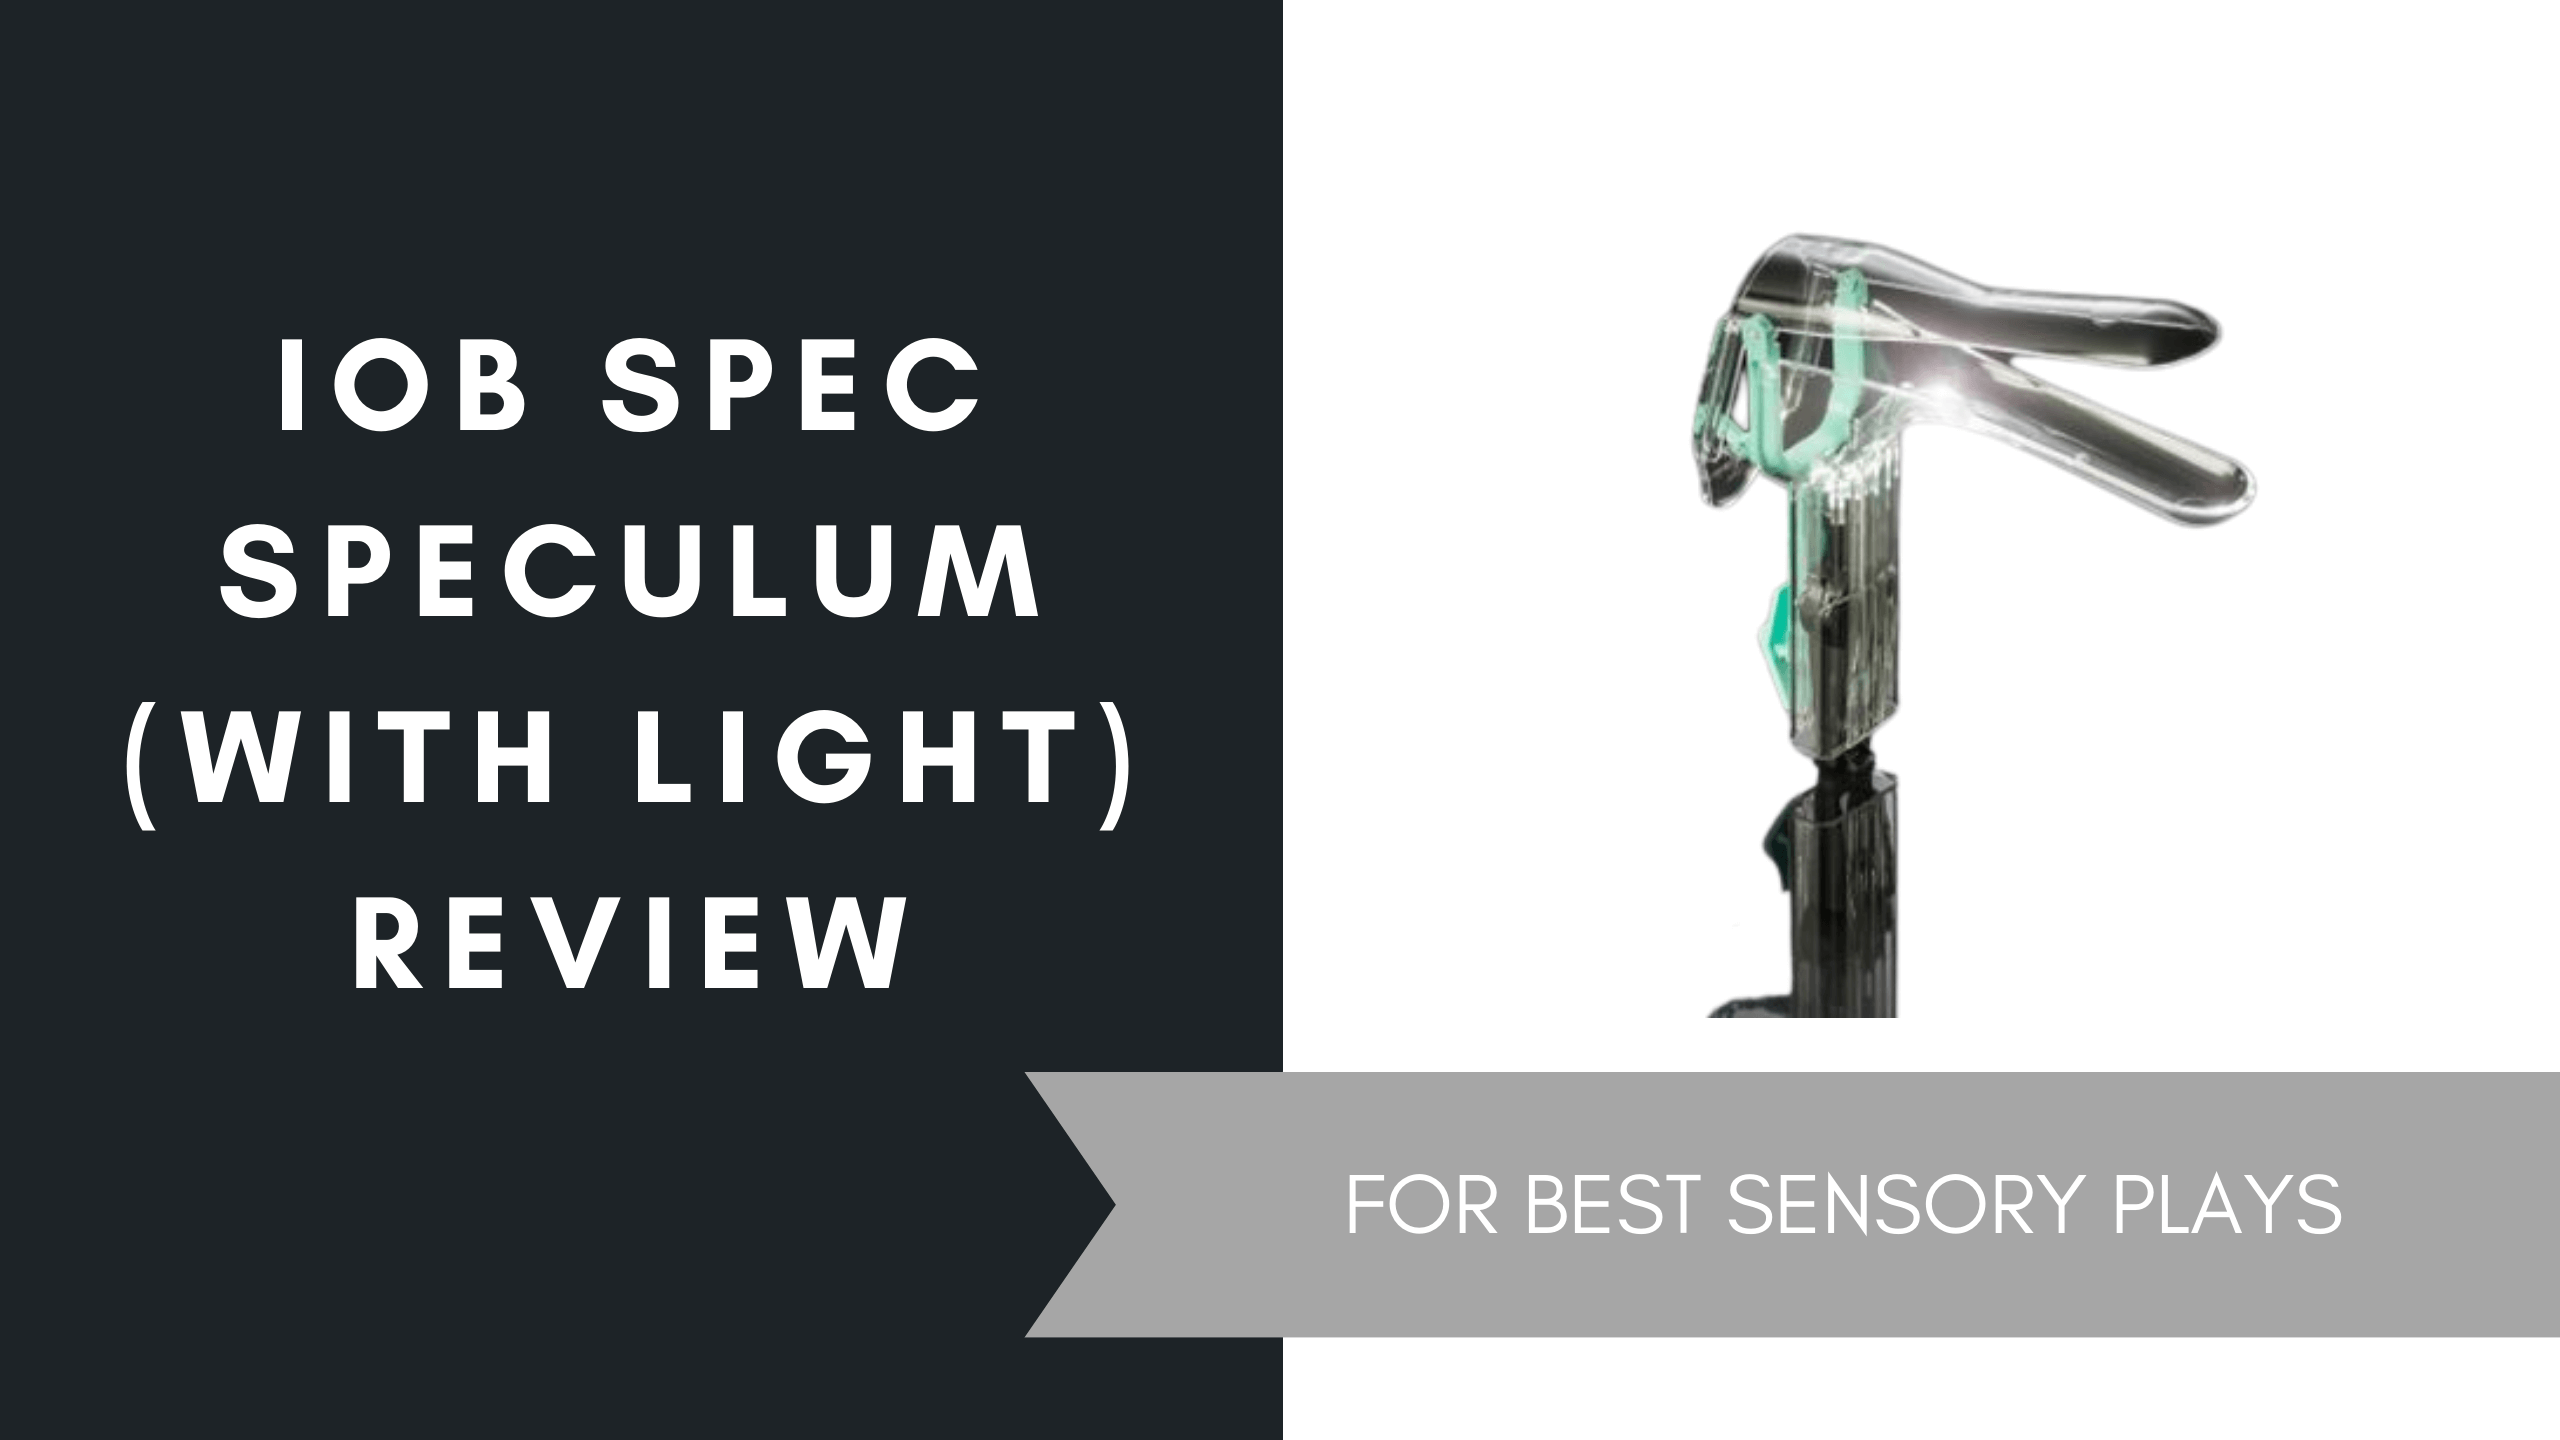 IOB-Spec Speculum with Light Review, June 2021